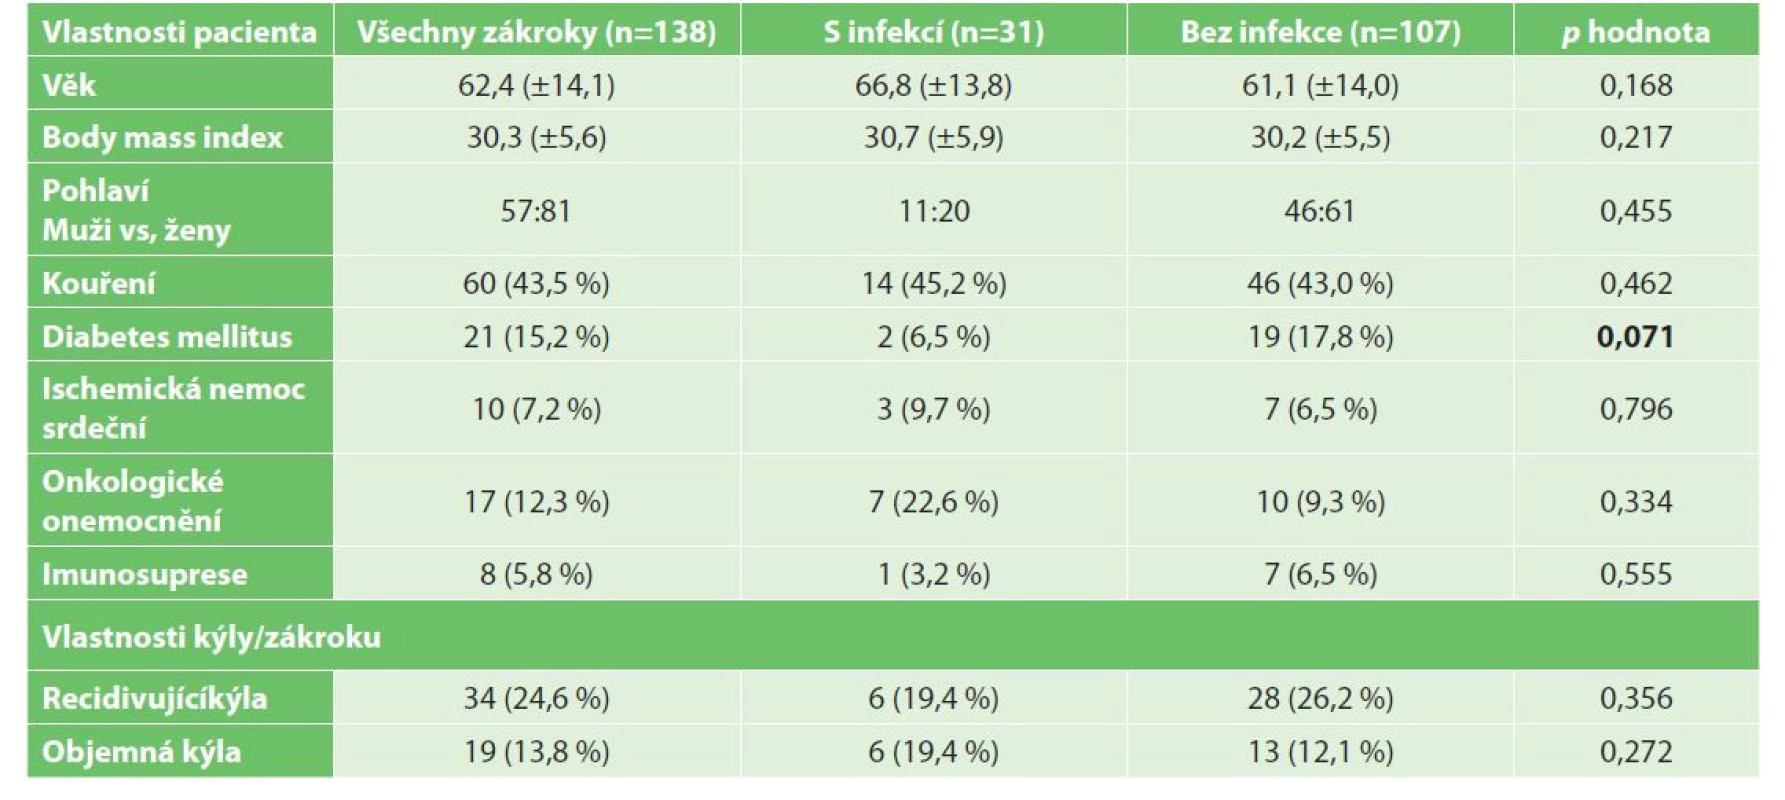 Poměr rizikových faktorů v skupině s infekcí a bez infekce<br>
Tab. 3: Ratio of risk factors in the groups with and without an infection